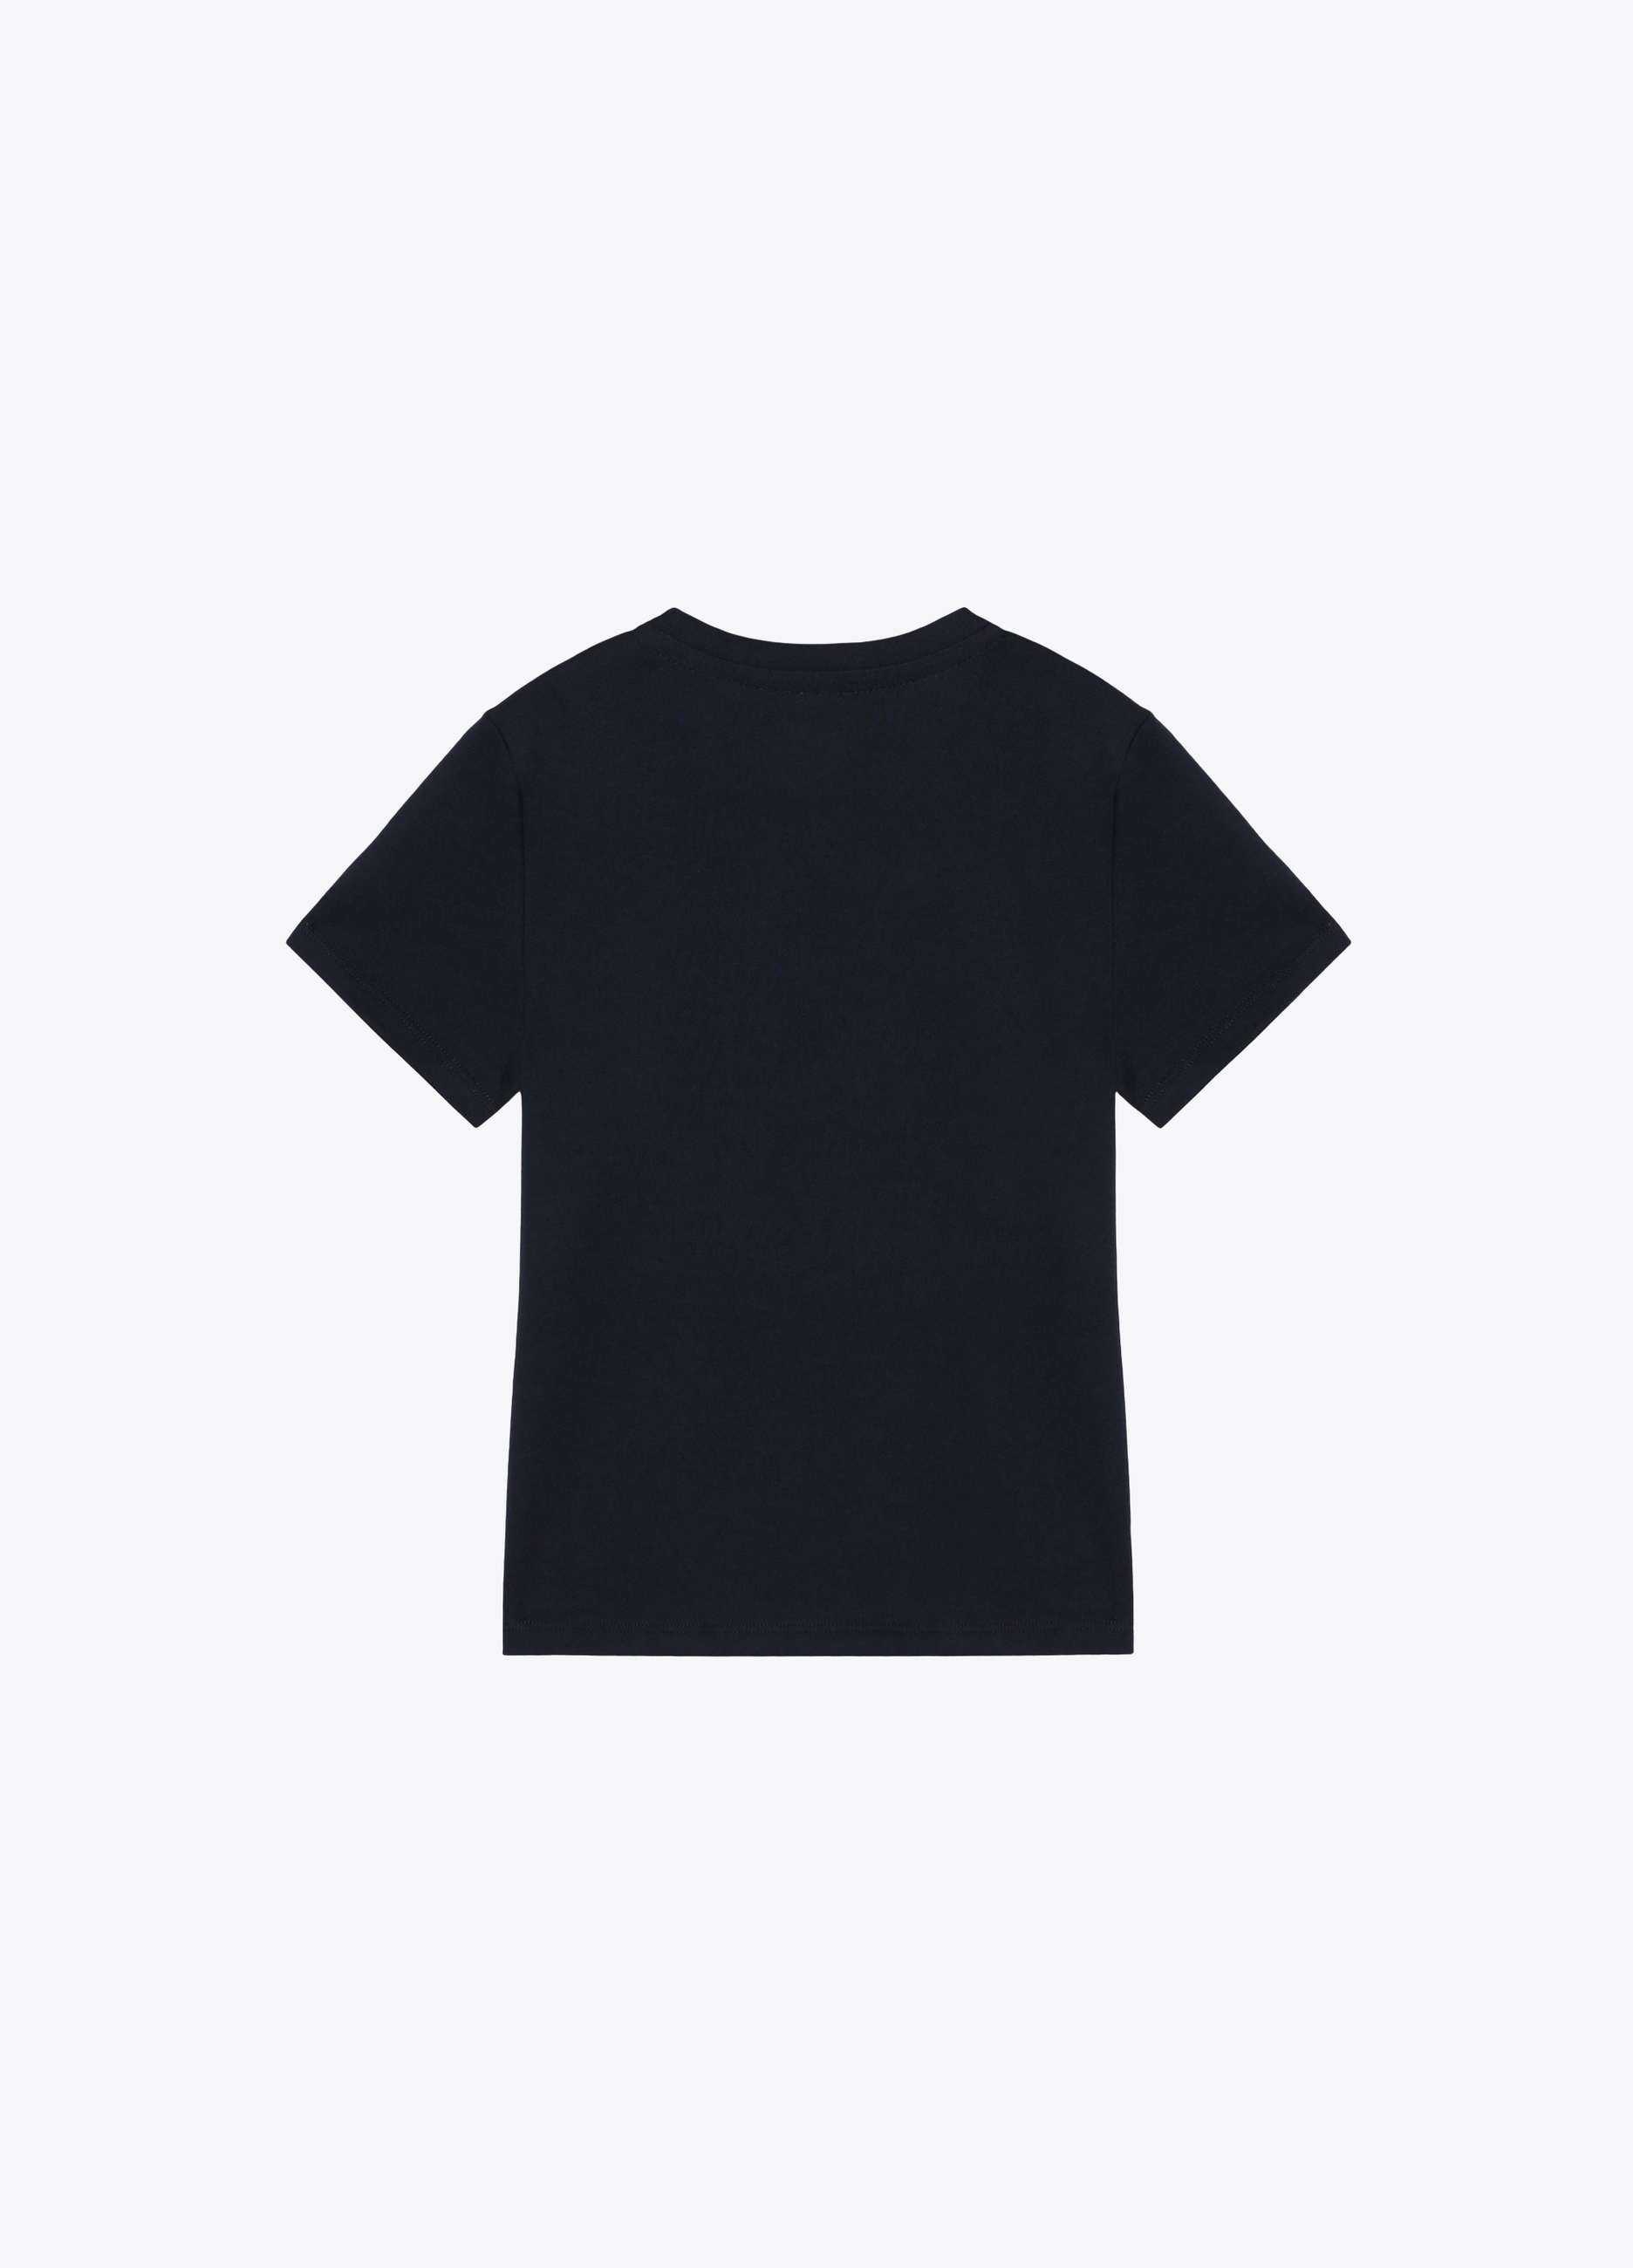 UNISEX - T-shirt a manica corta con stampa foil.